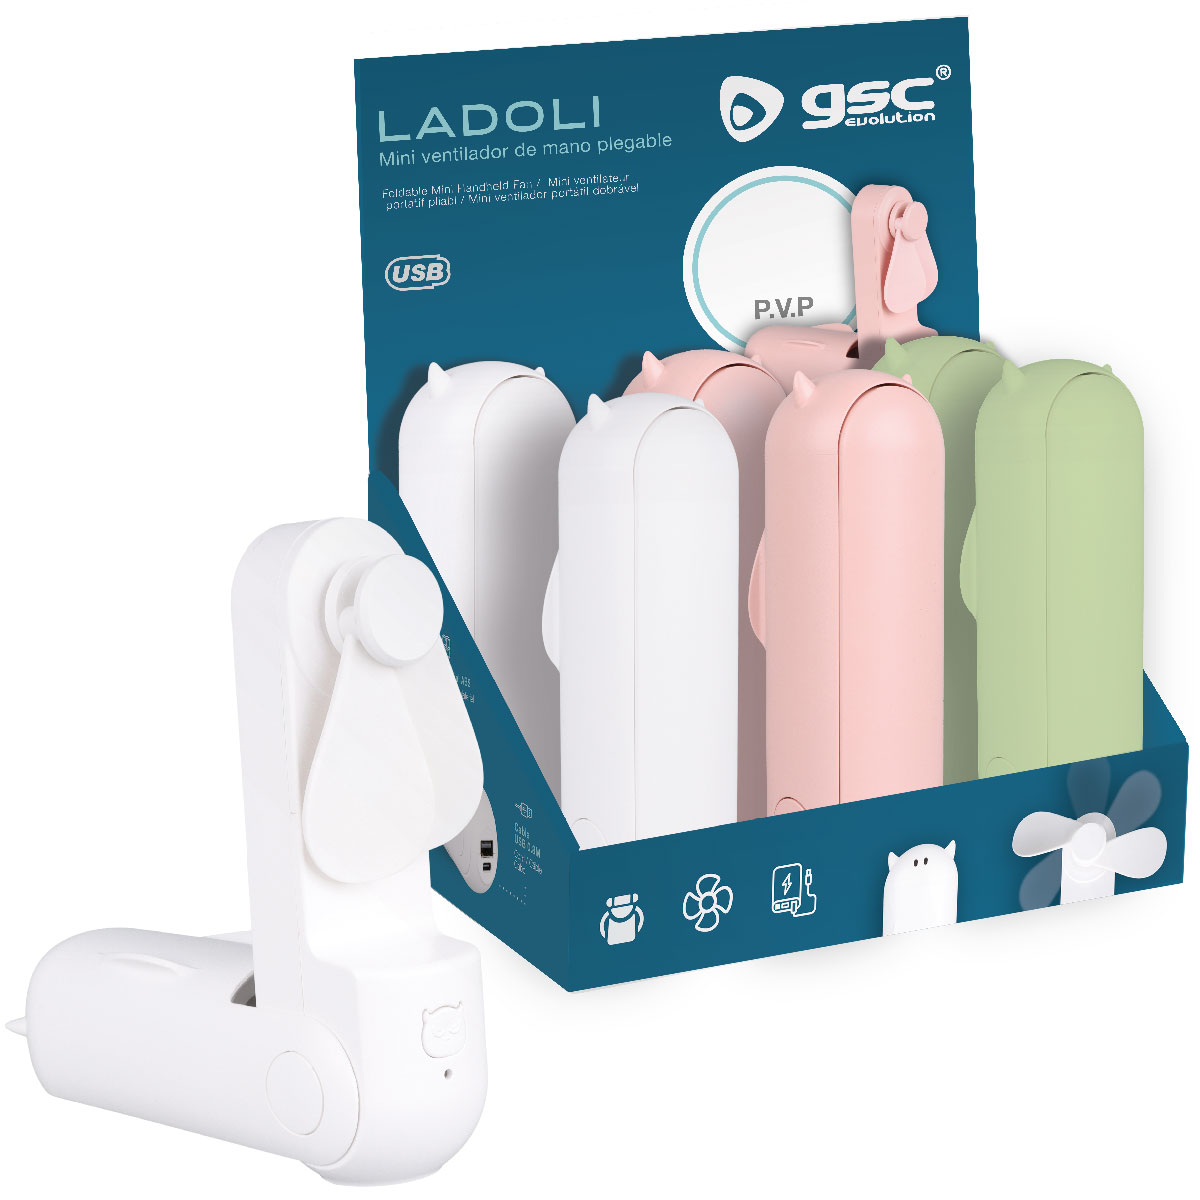 Ladoli Mini portable foldable fan 